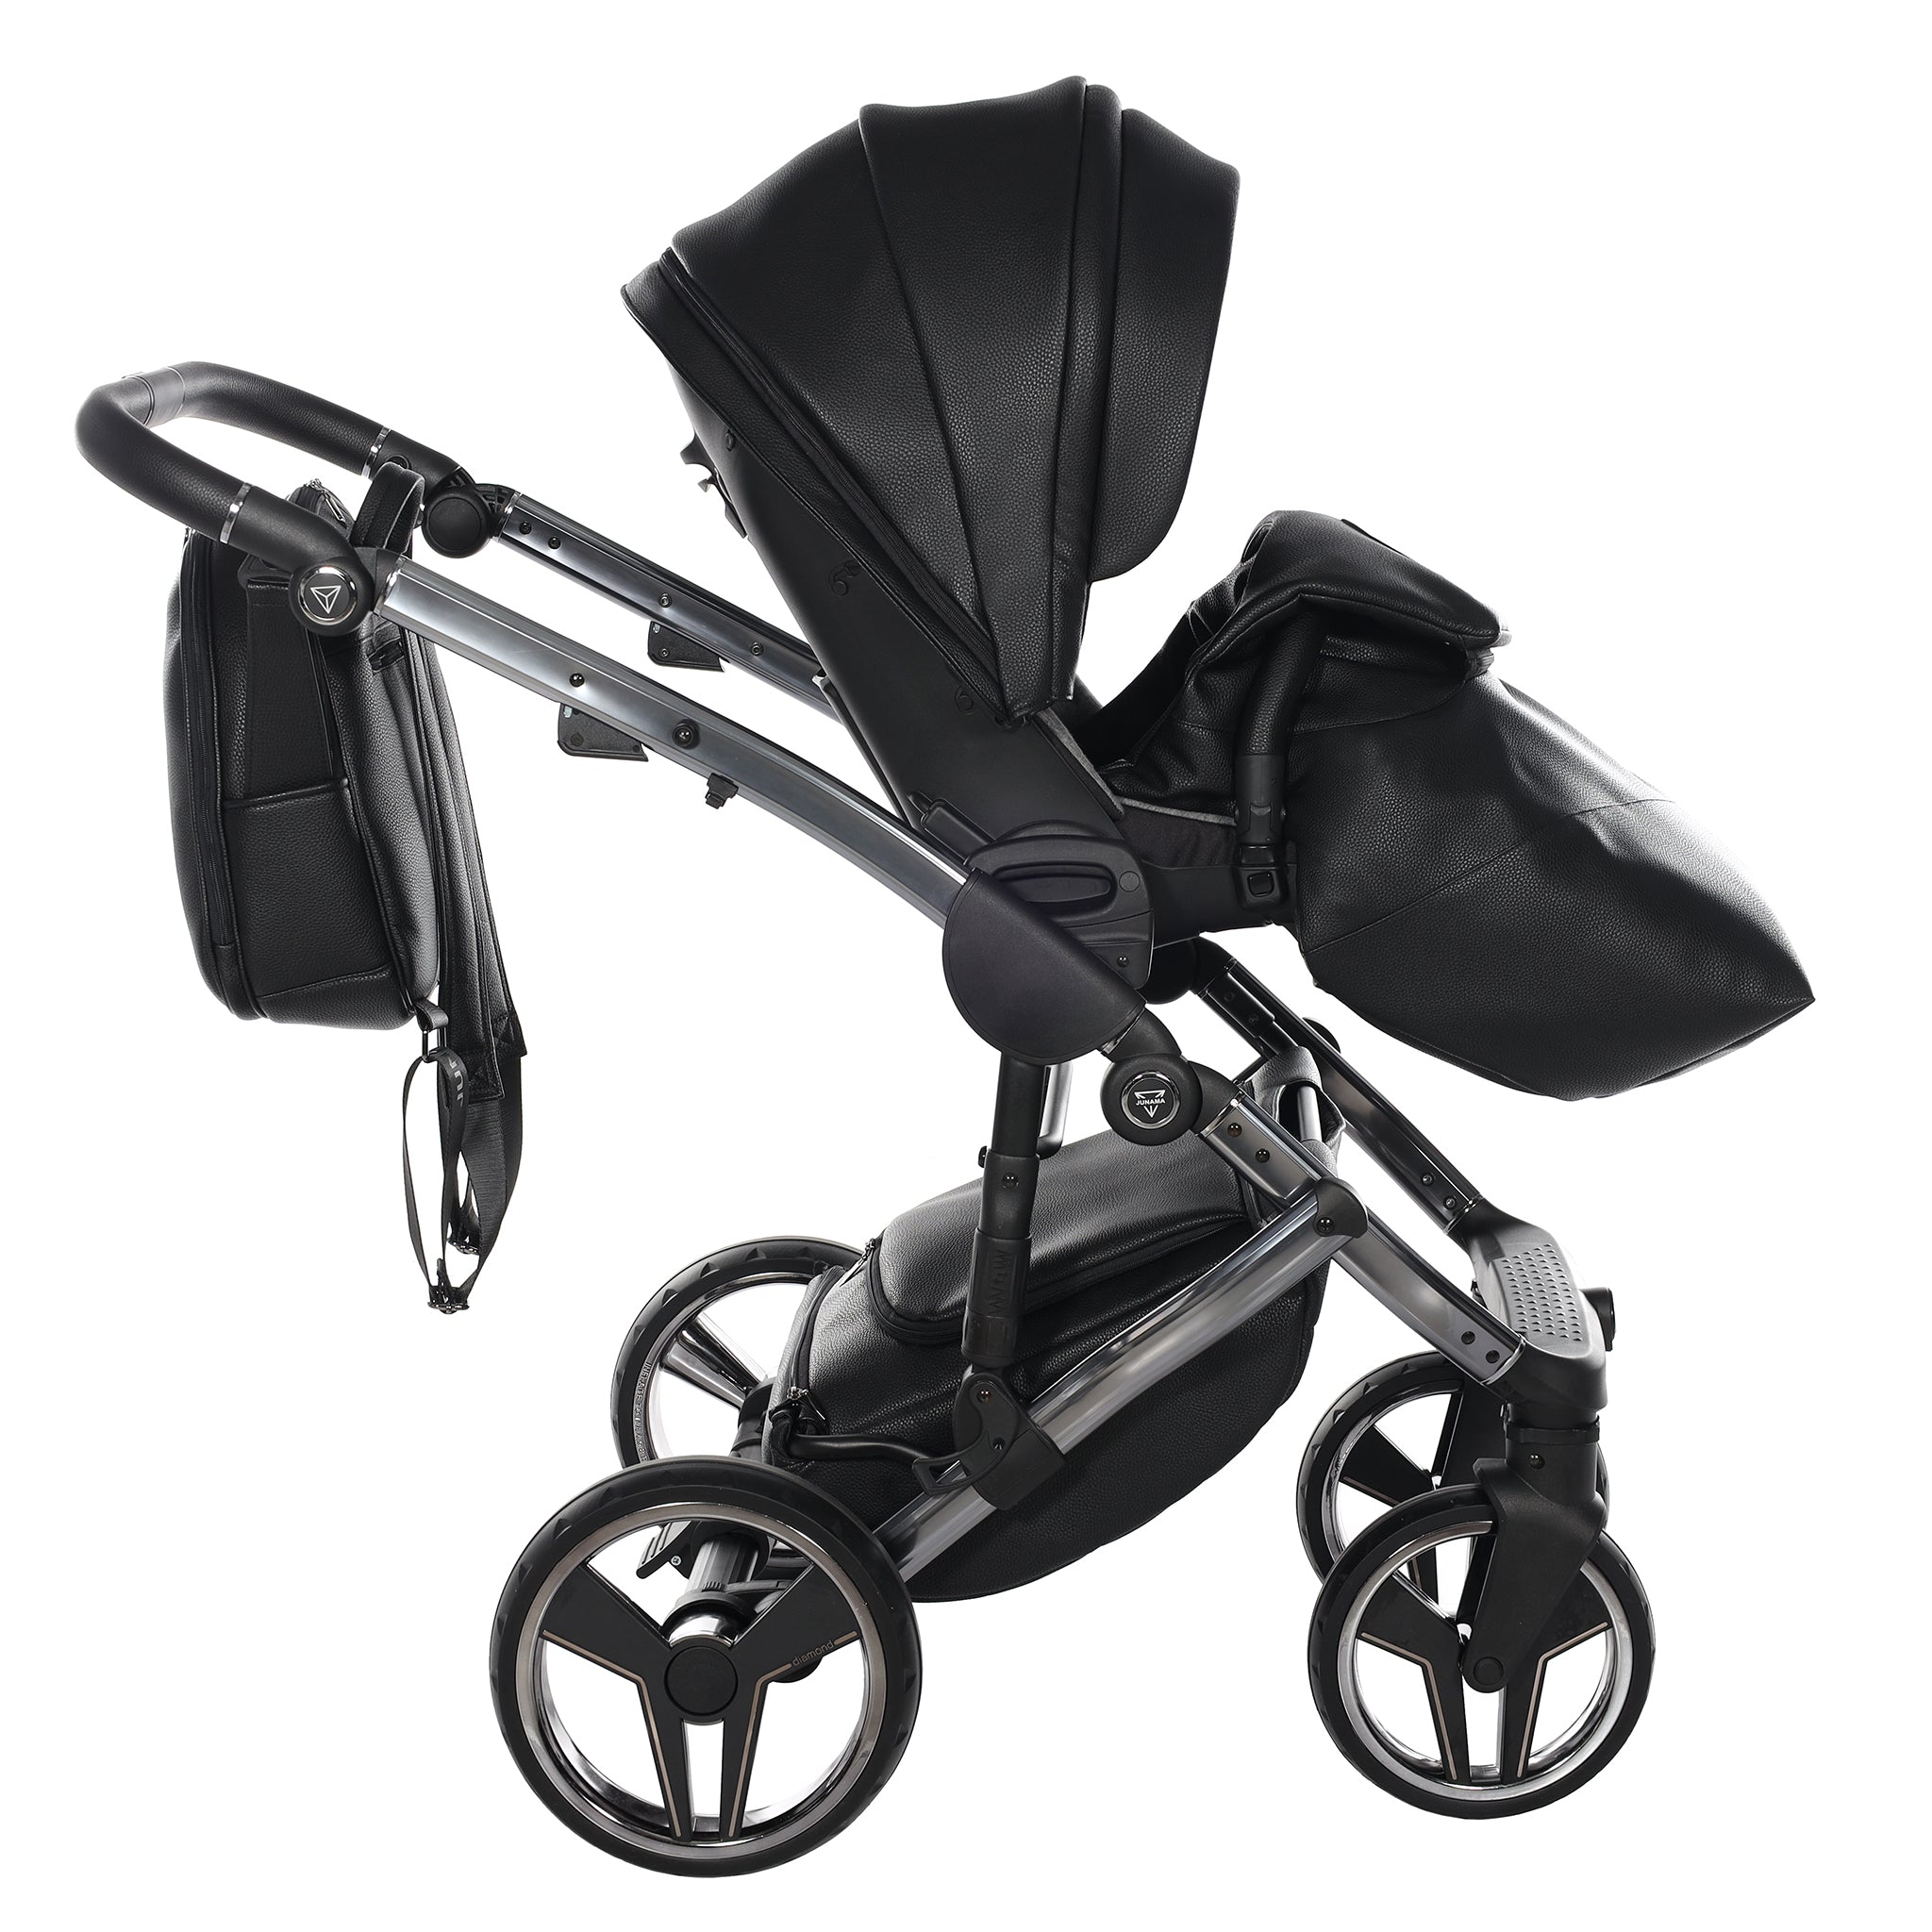 Junama Handcraft, baby prams or stroller 2 in 1 - Black, number: JUNHC04